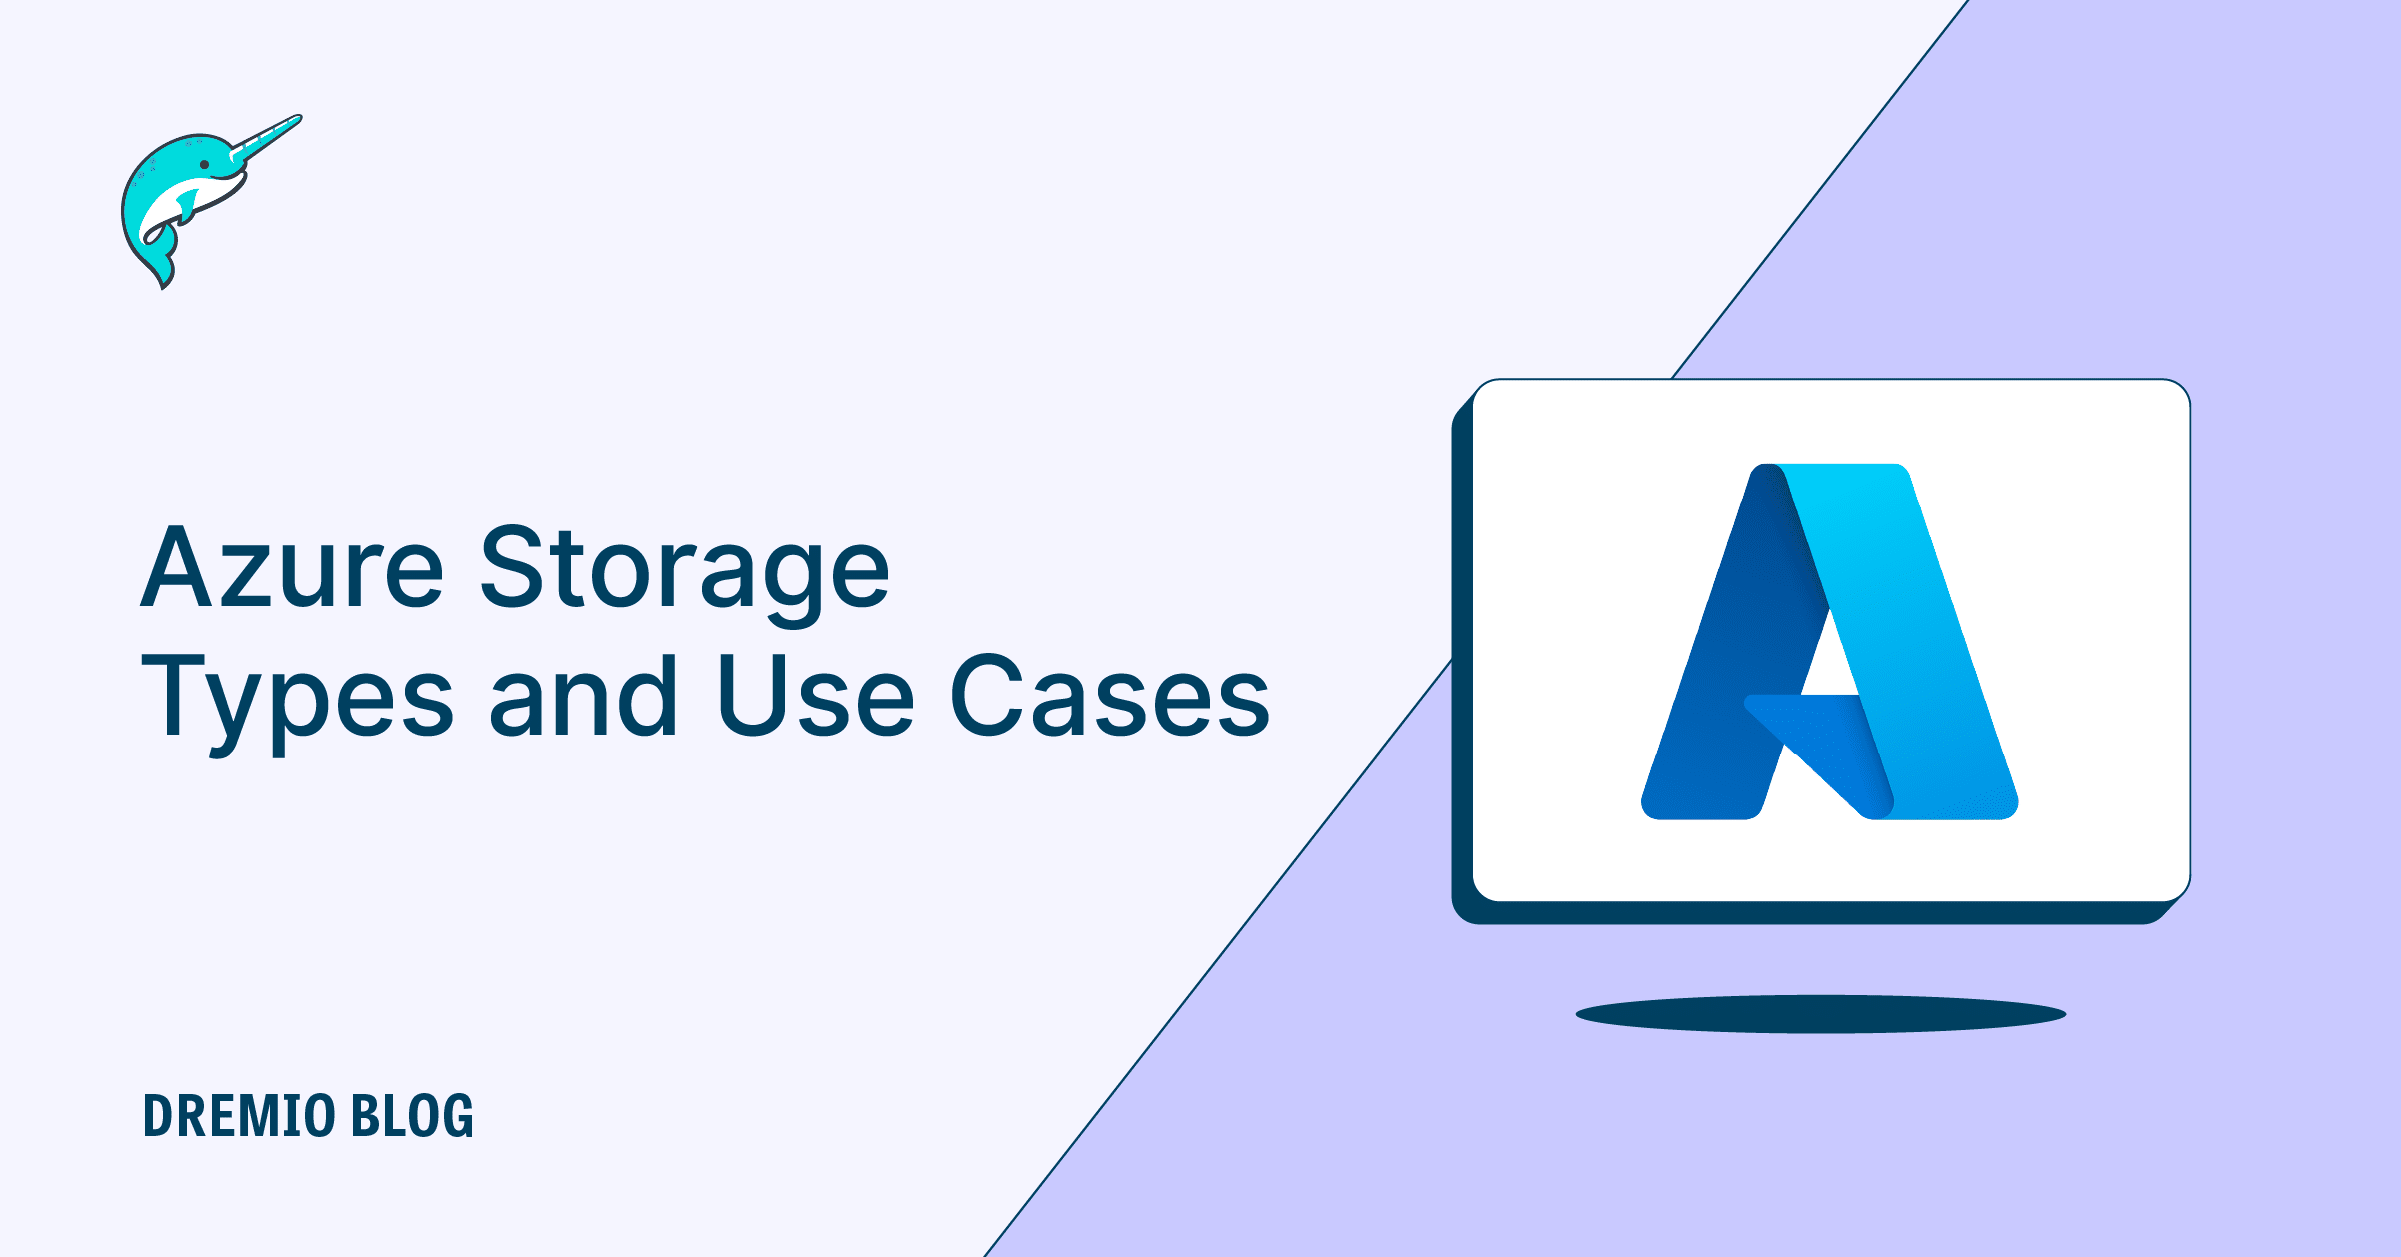 07 Understanding Azure Table Storage 